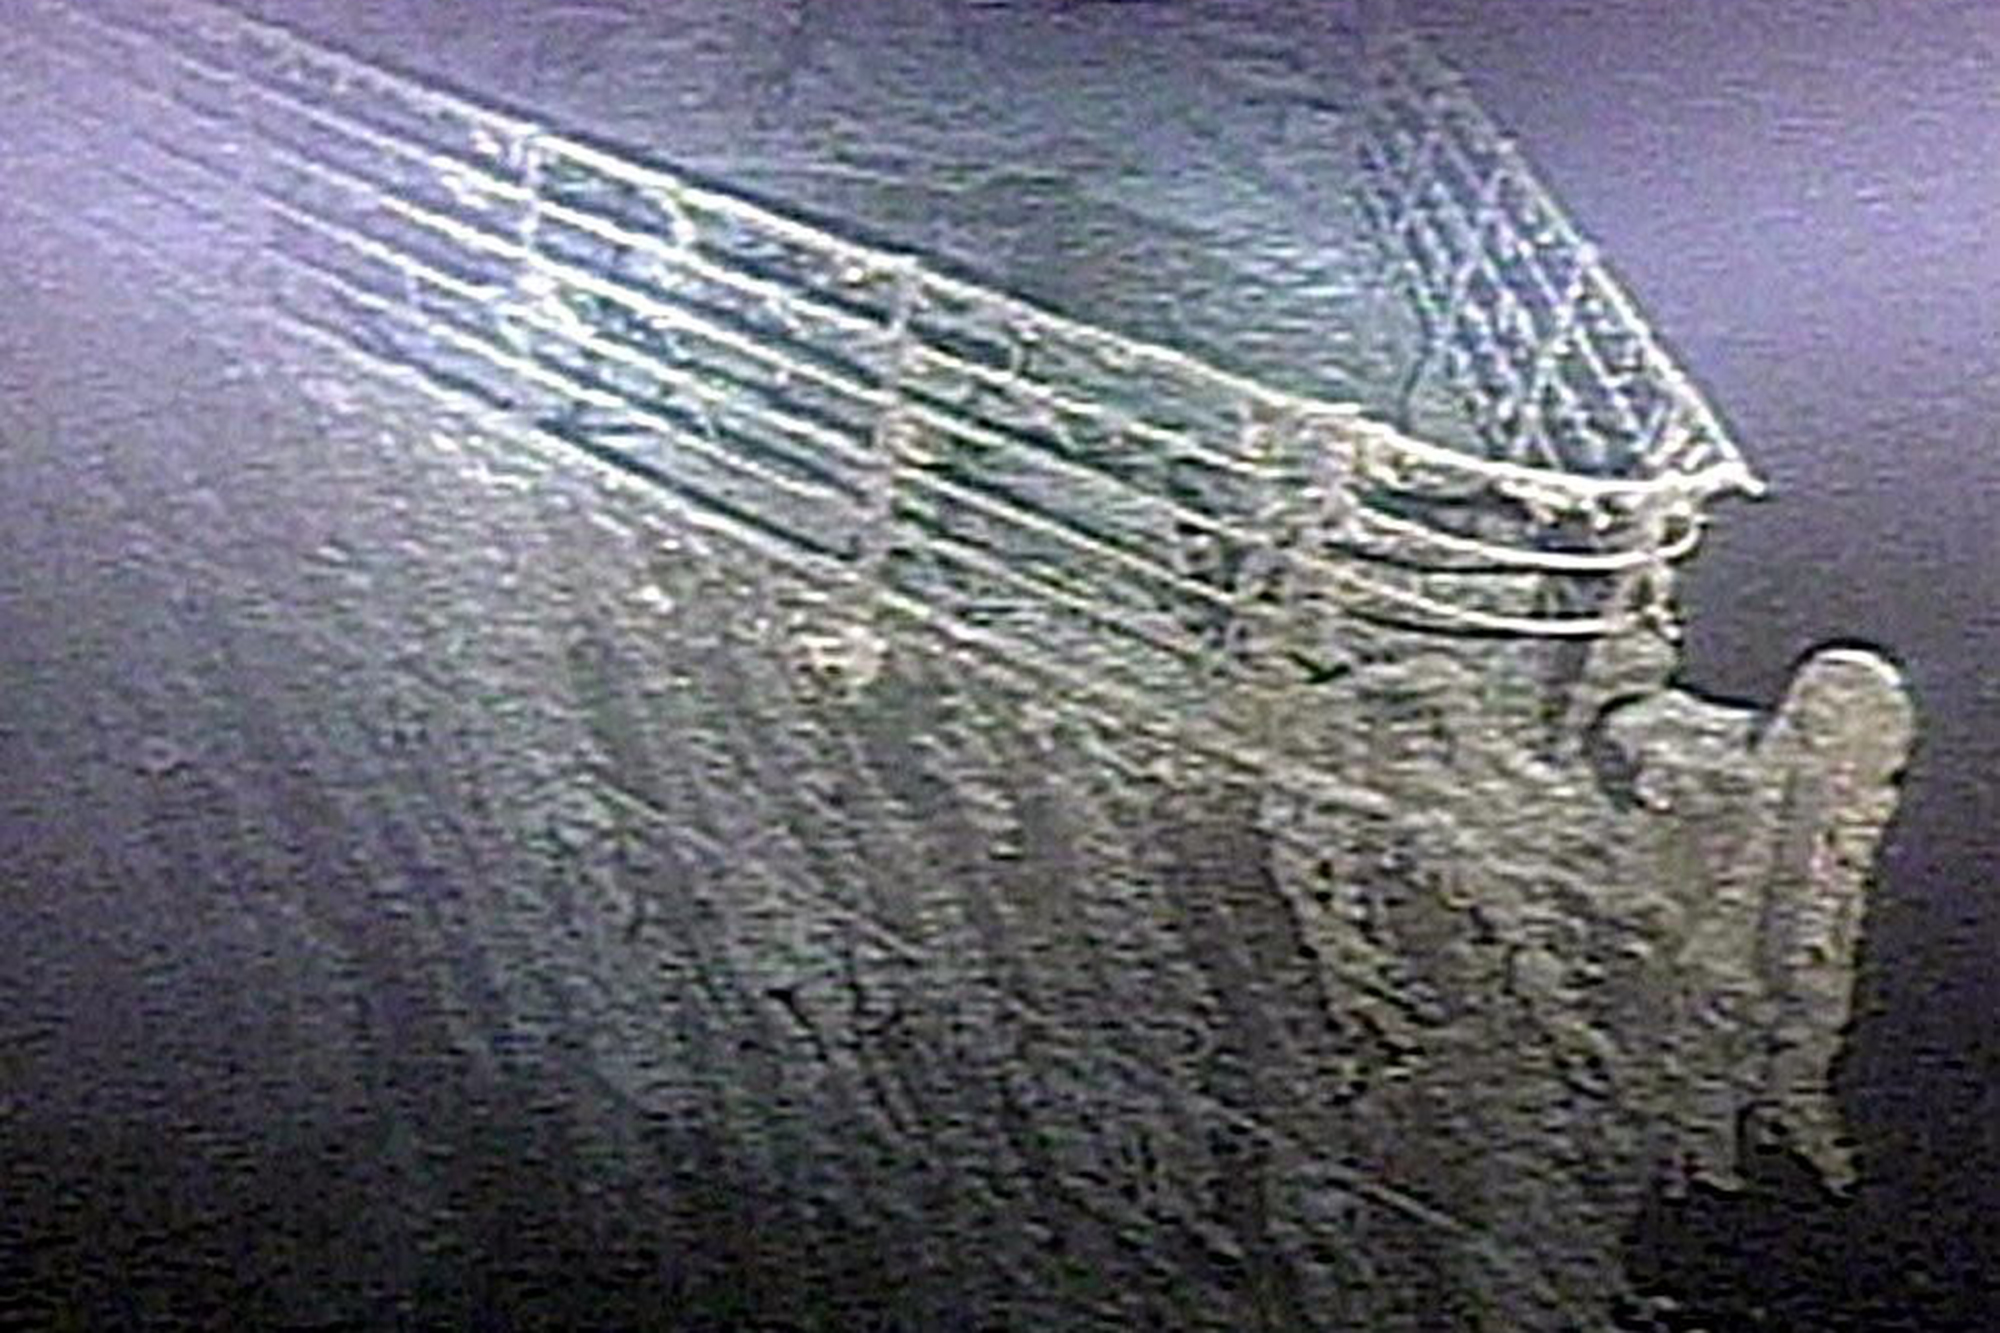 Wrack der "Titanic" am Meeresboden des Atlantik (Bild: RMS Titanic Inc./Discovery Channel/EPA)